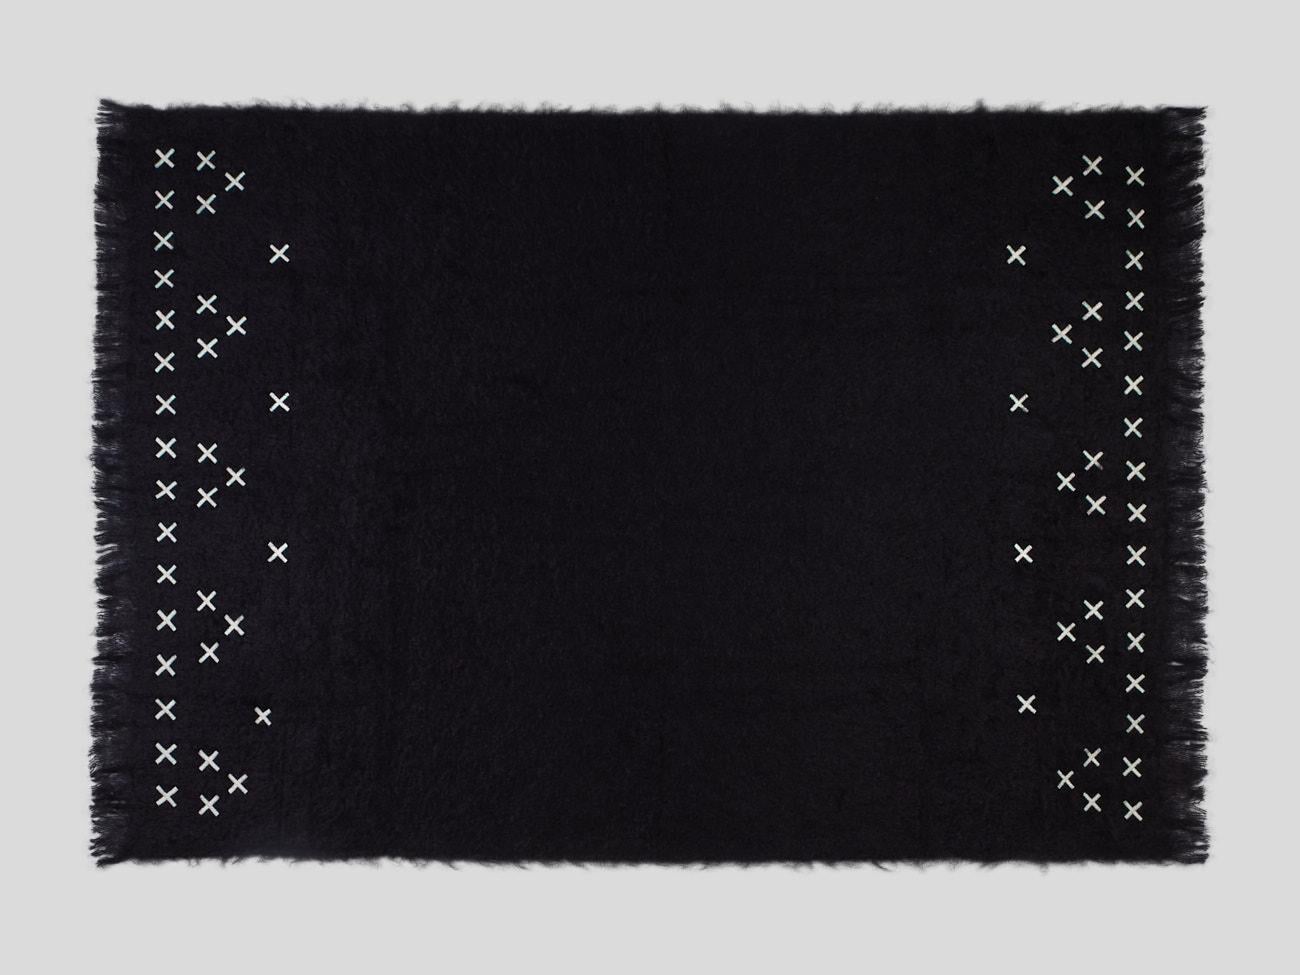 Hand-Crafted Hocken, Hand Embroidered Black Throw Blanket